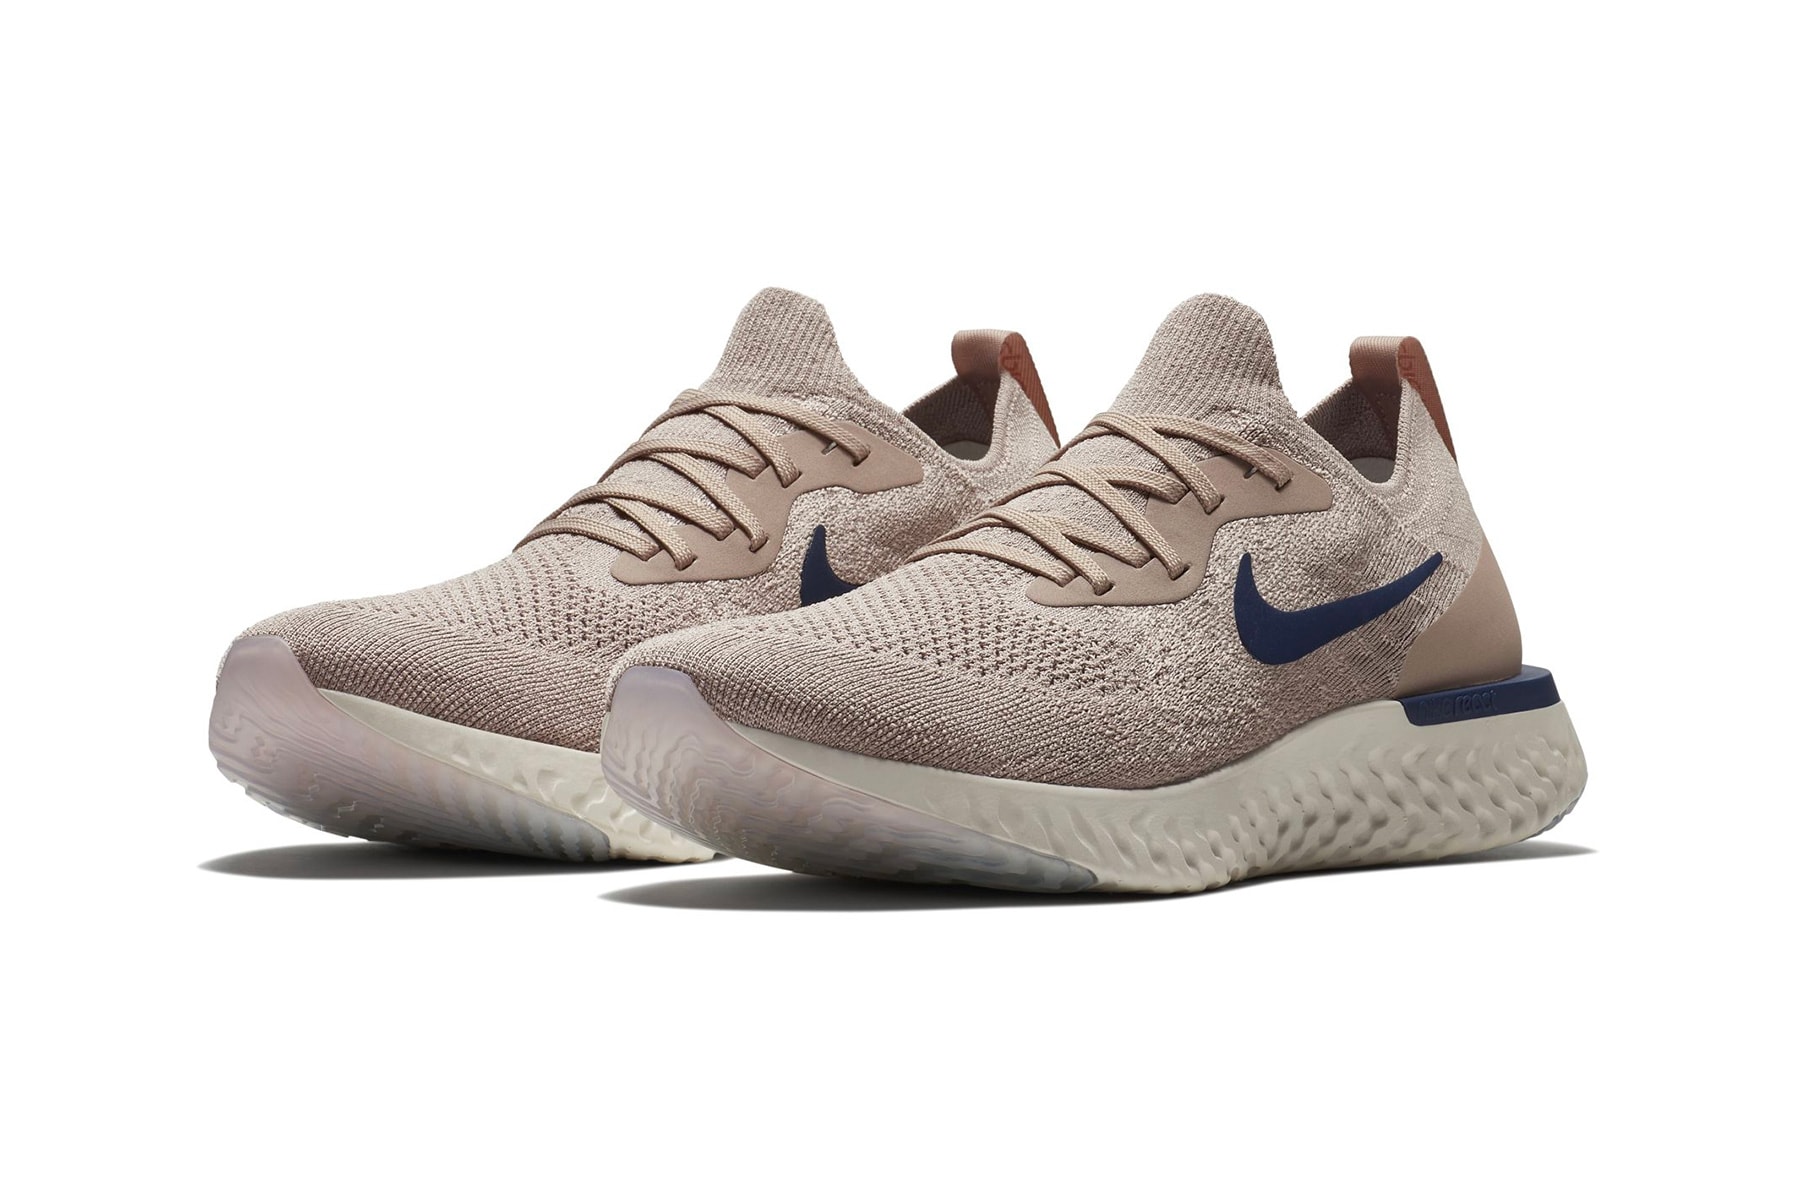 Nike Epic React Flyknit "Tan/Navy" Colorway release date first look price beige blue neutral sneaker